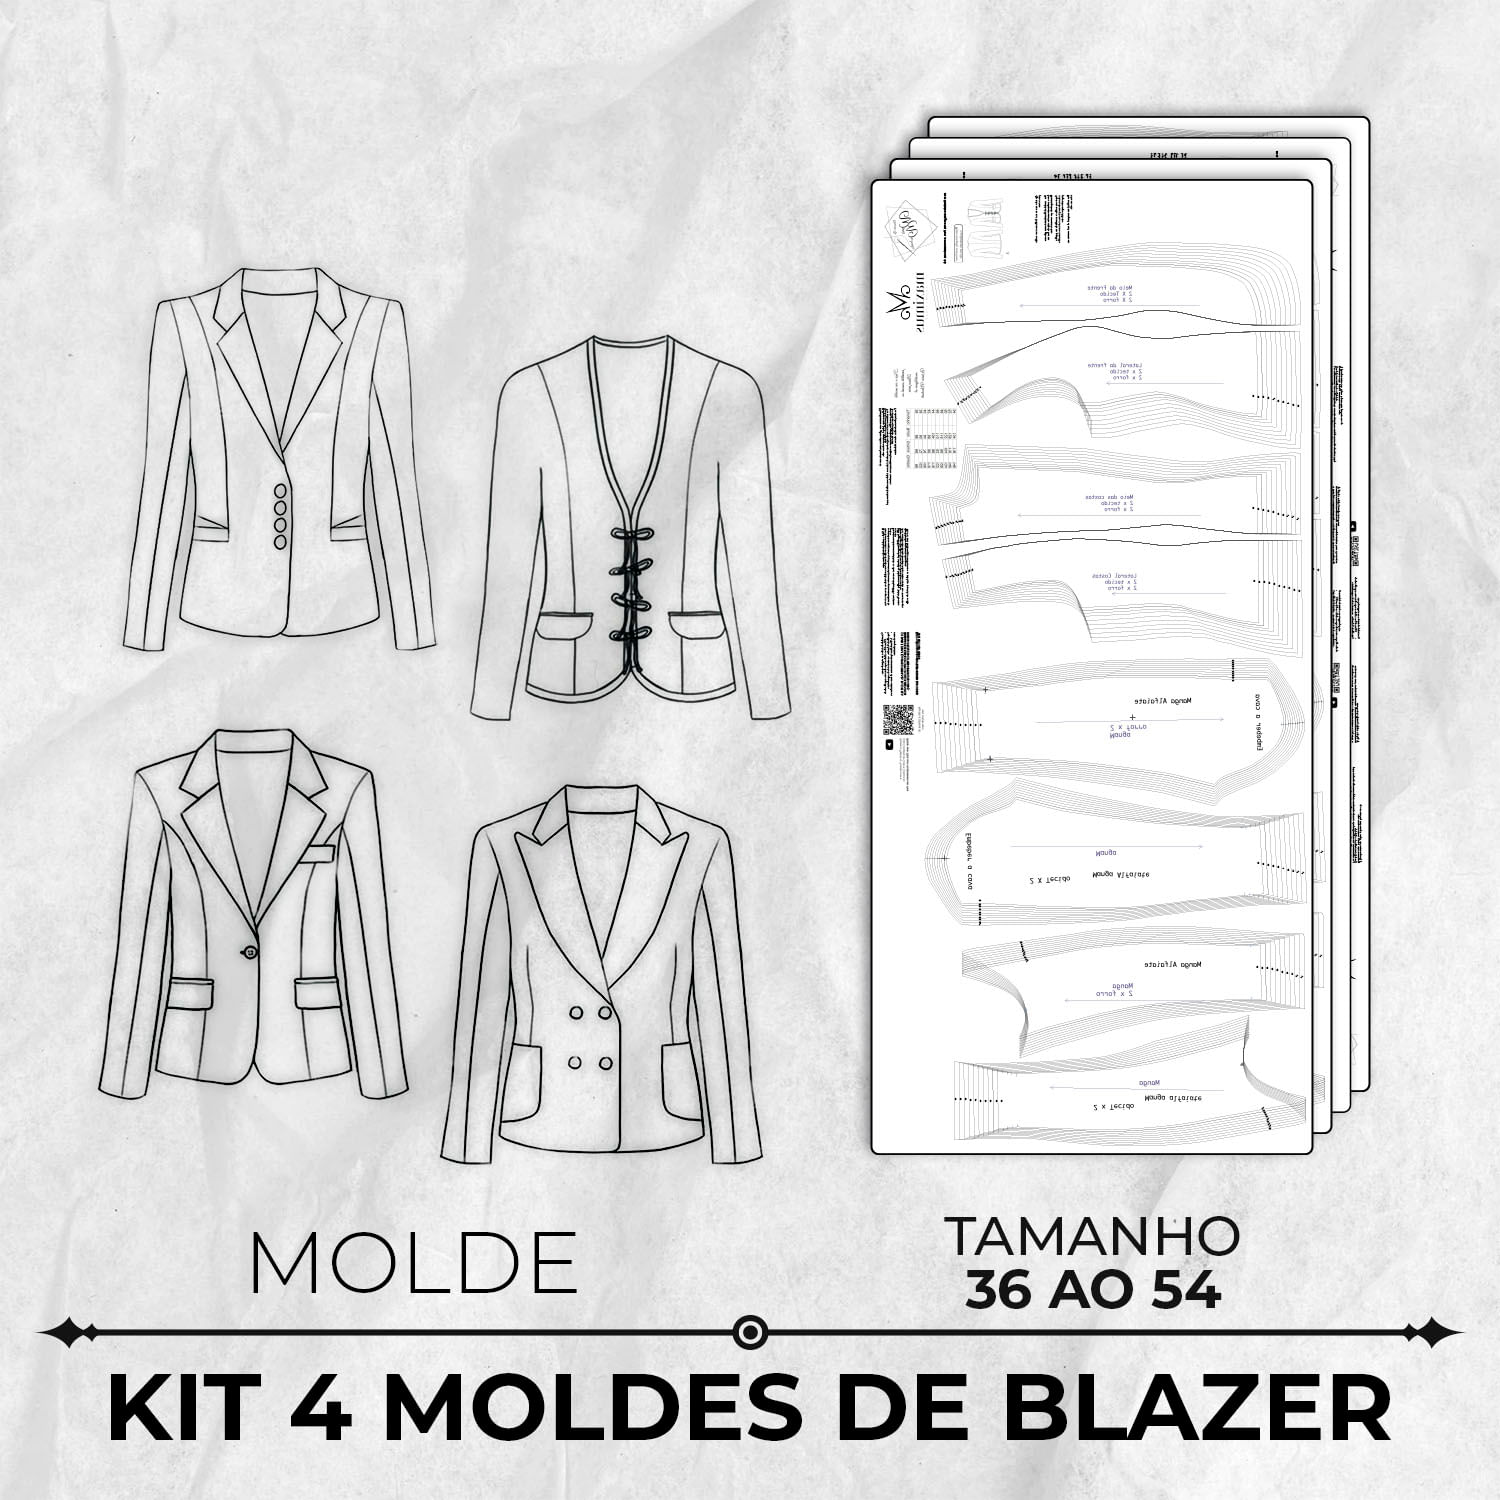 Kit 4 moldes de Blazer tamanho 36 ao 54 by Wania Machado